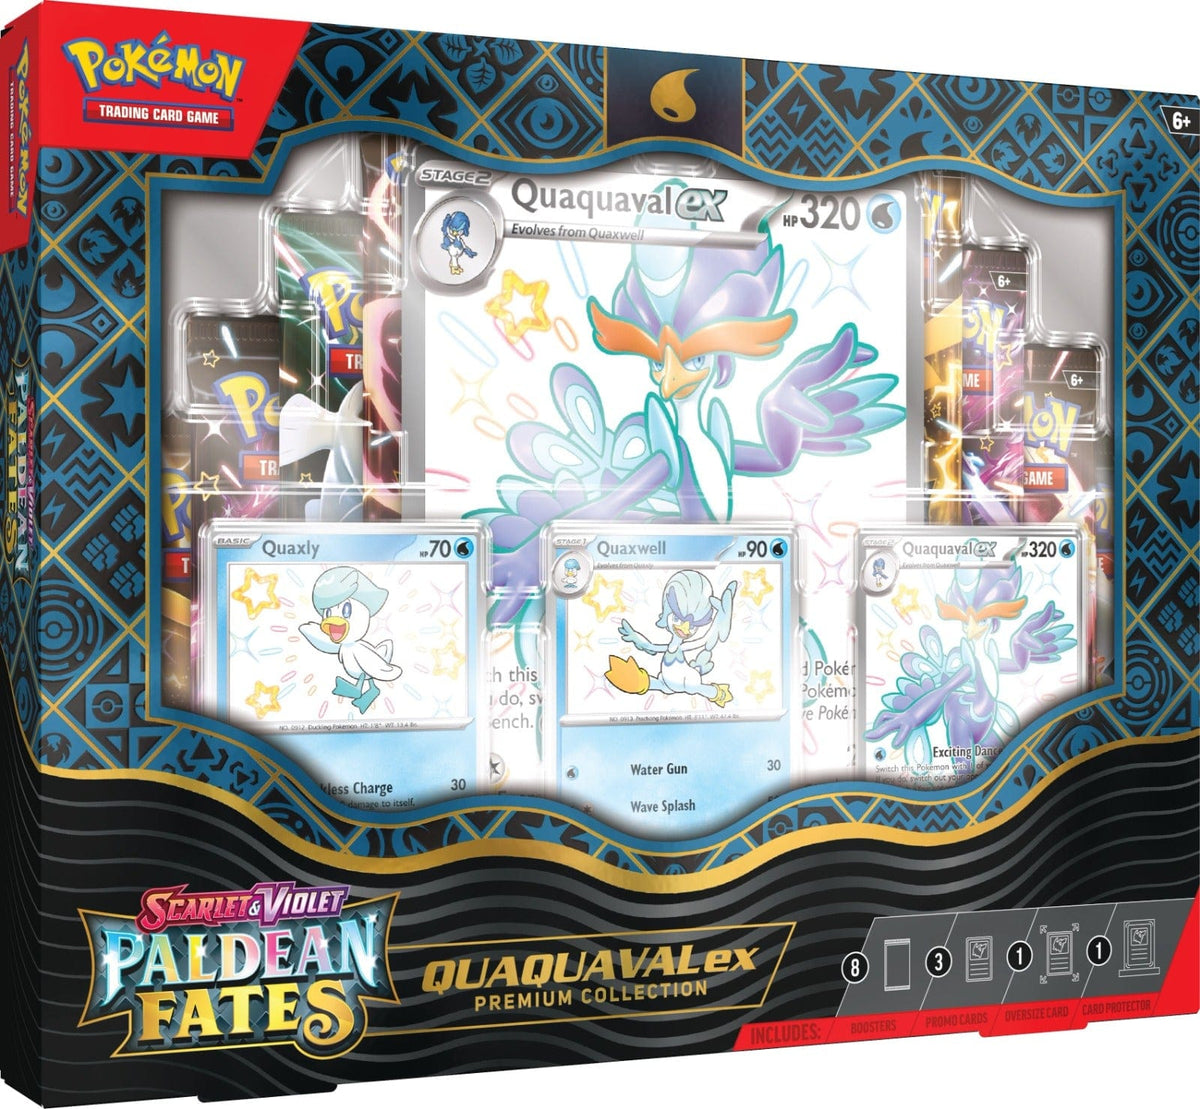 Pokémon TCG Paldean Fates - Quaquaval ex Premium Collection